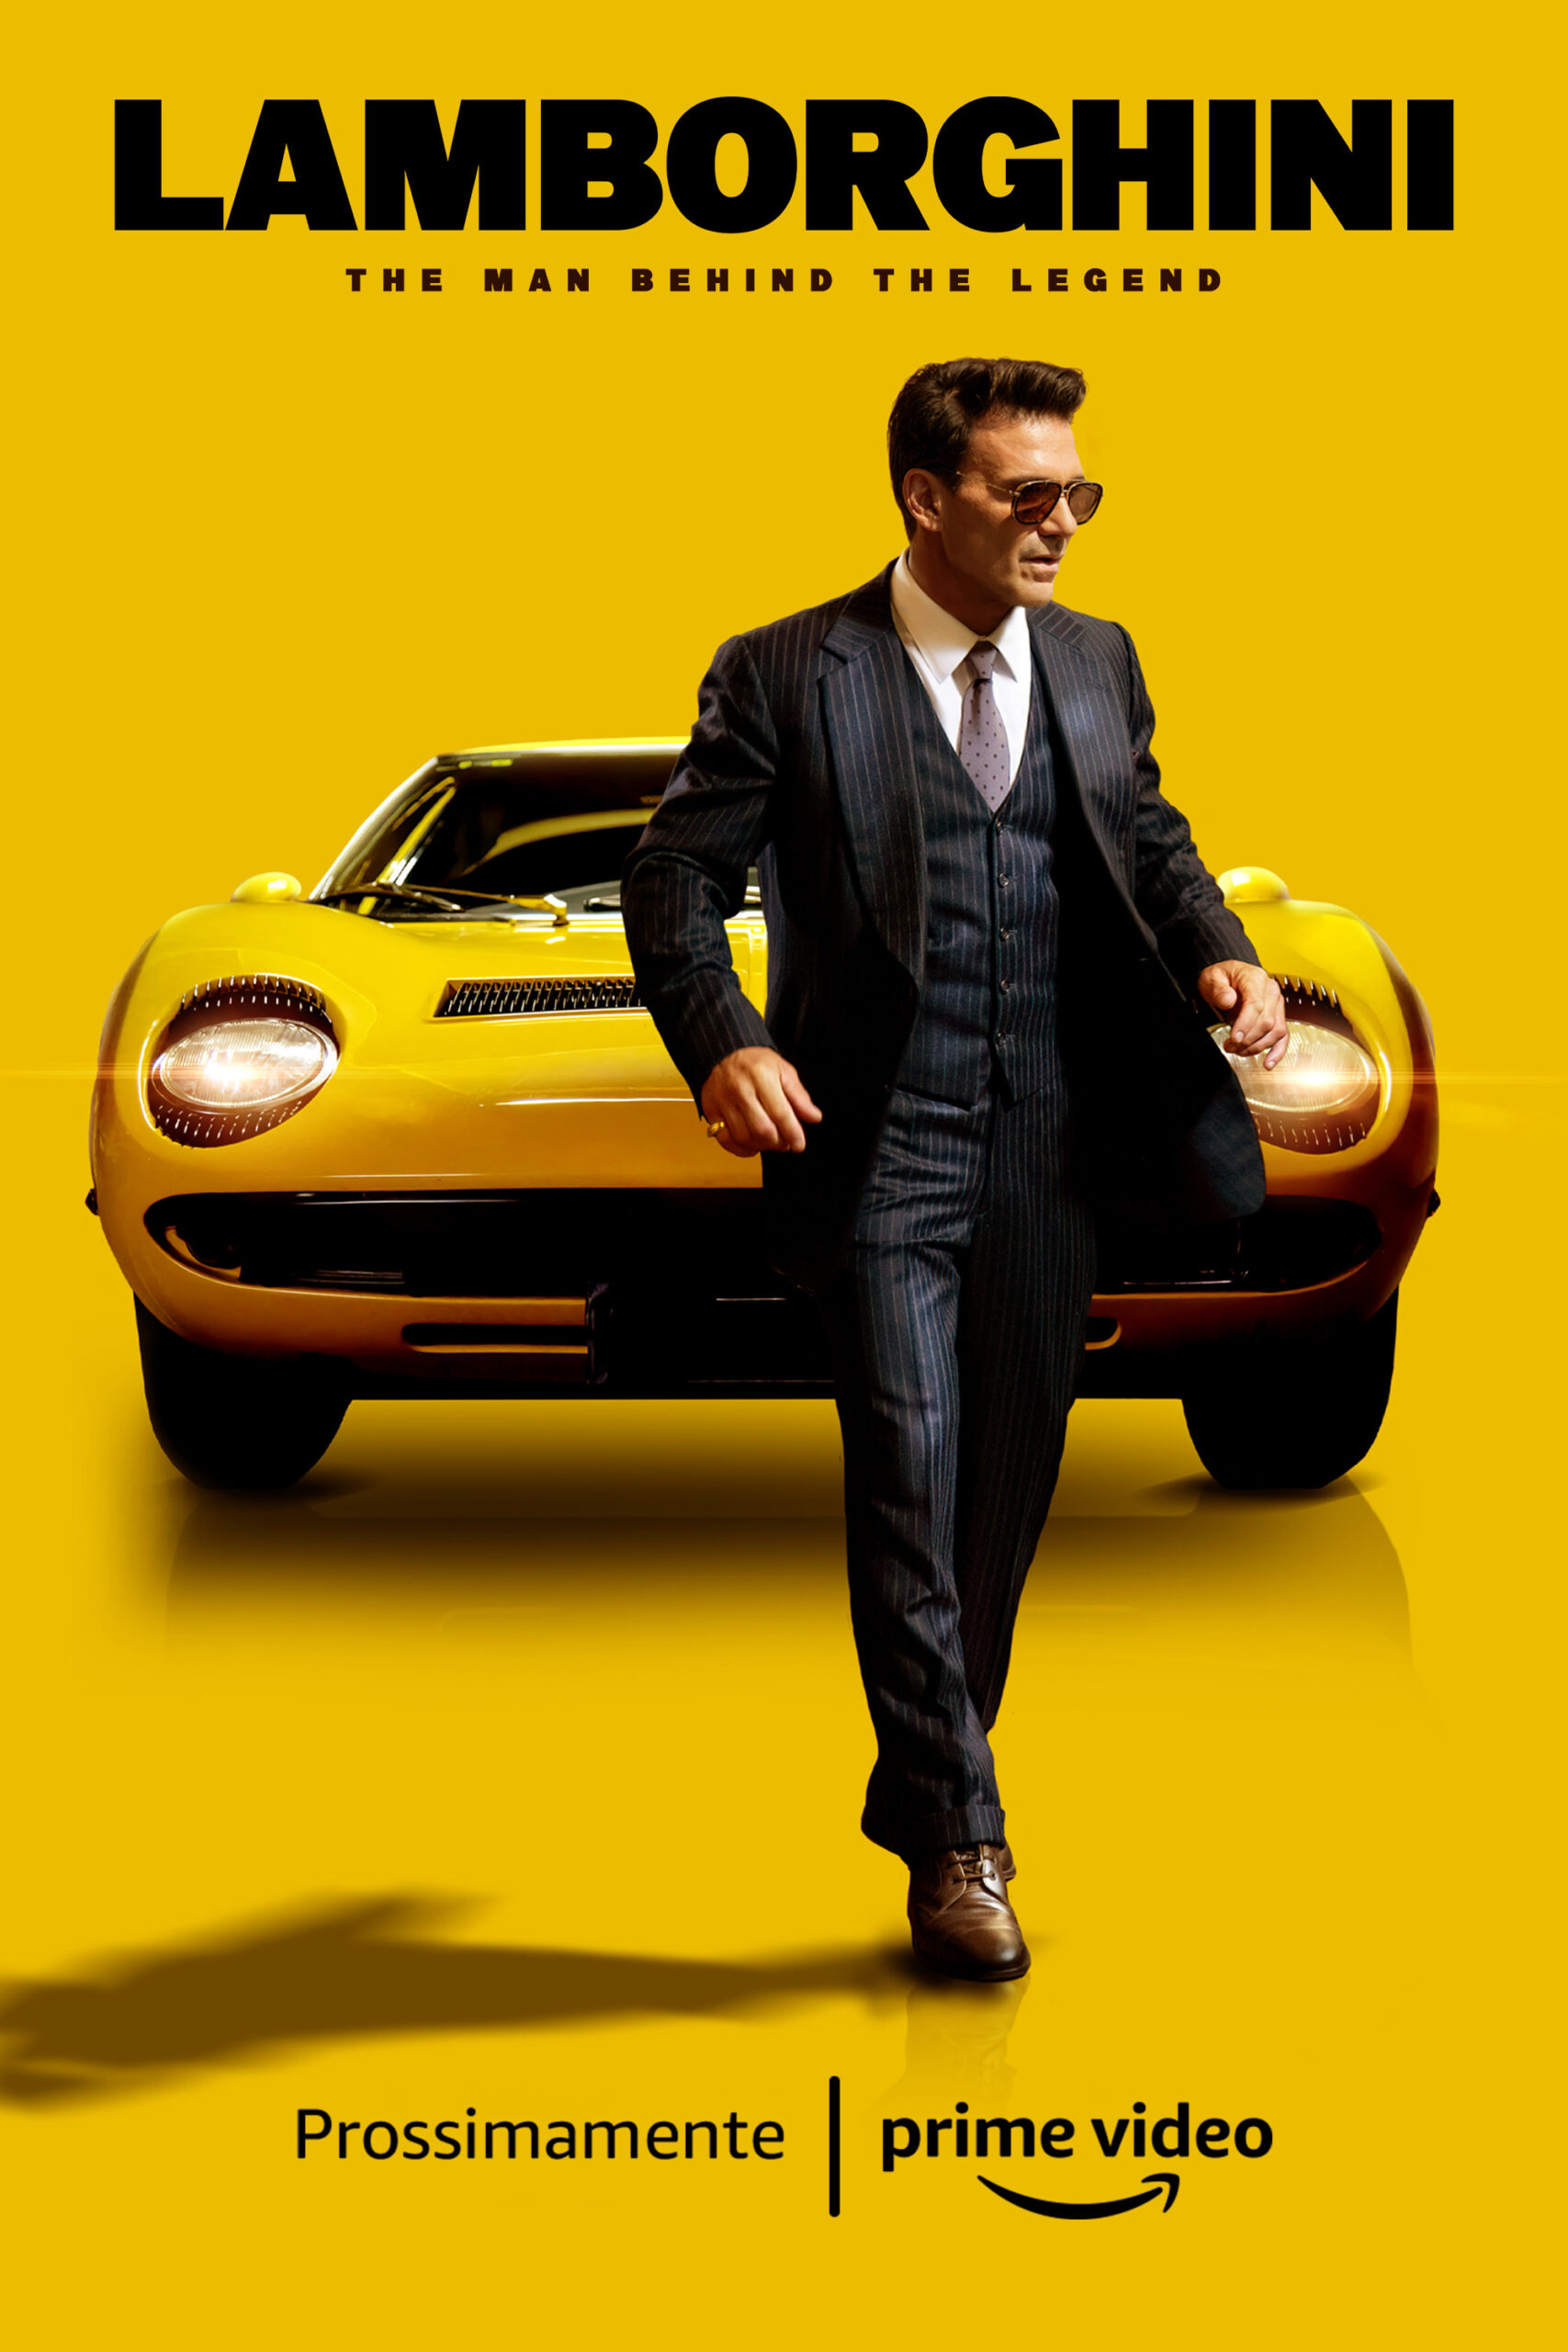 Lamborghini – The man behind the legend